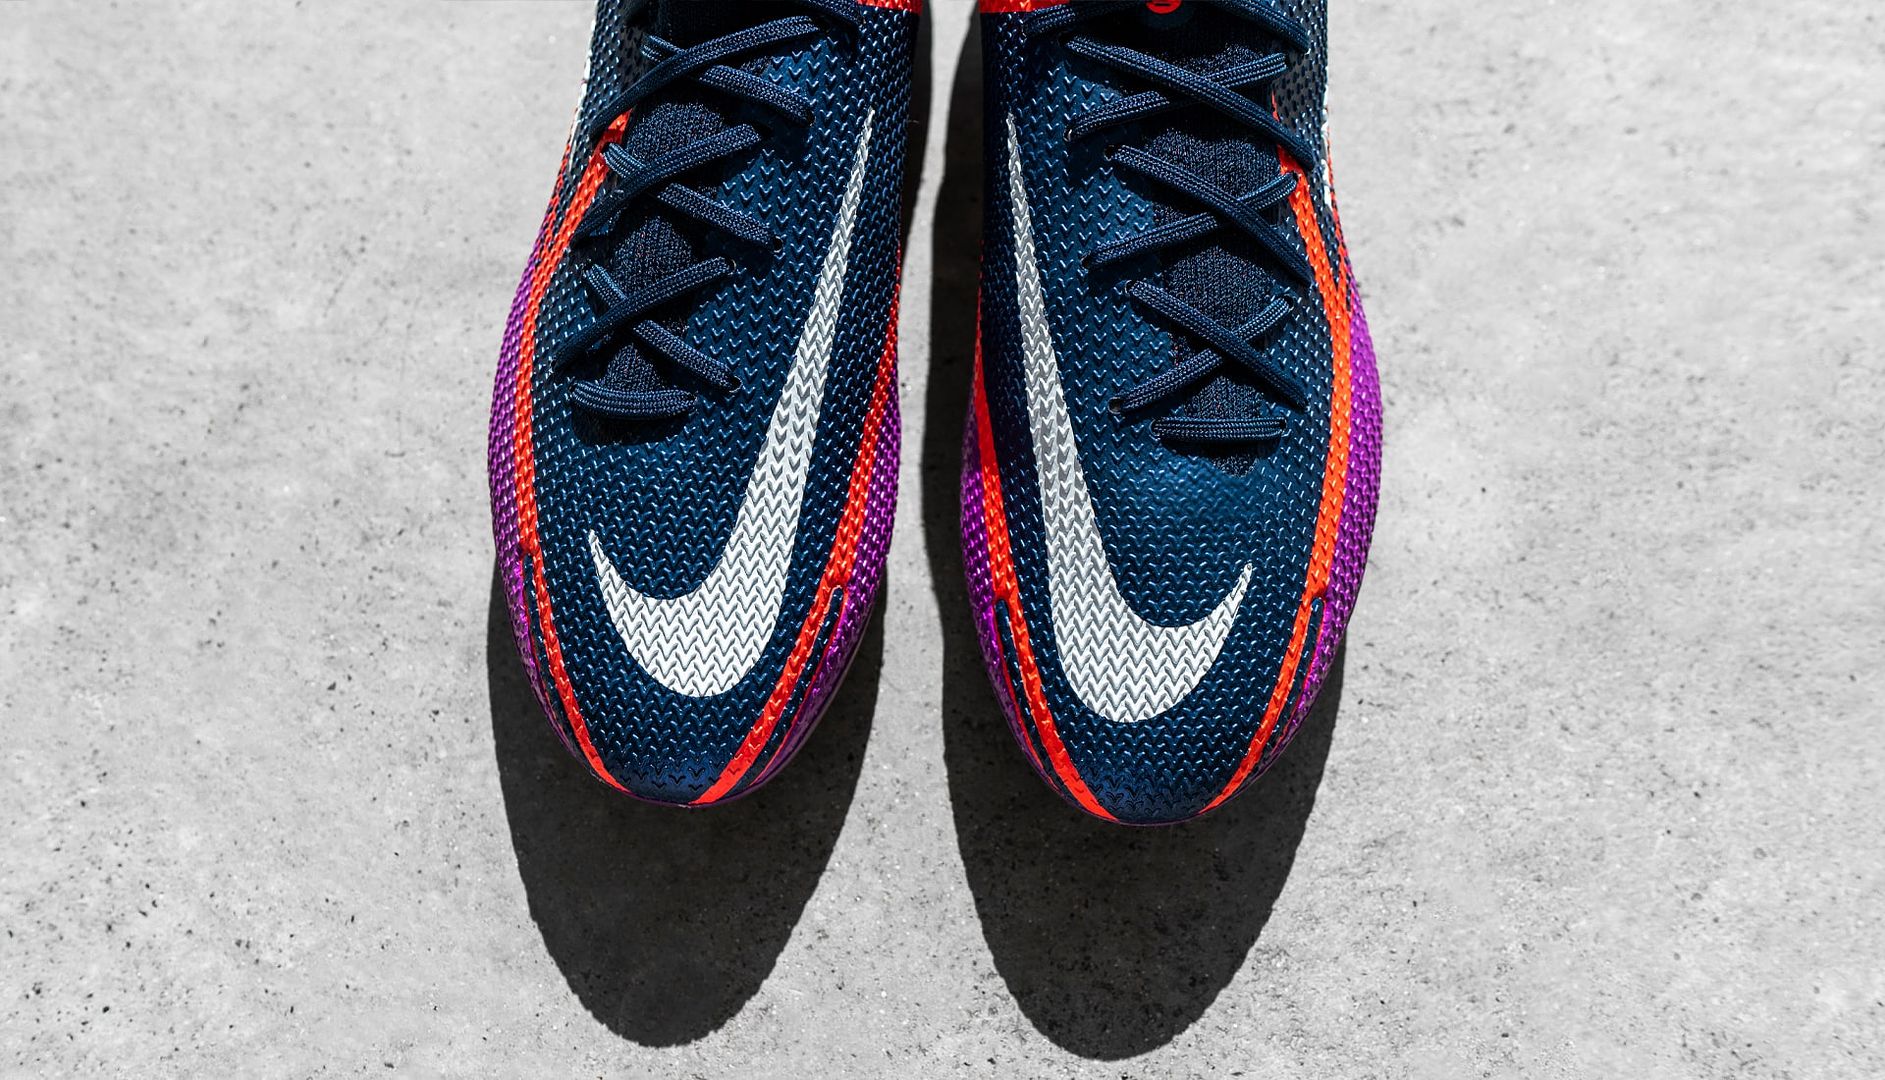 Giày đá bóng Nike Phantom GT 2 UV Edition khoai môn